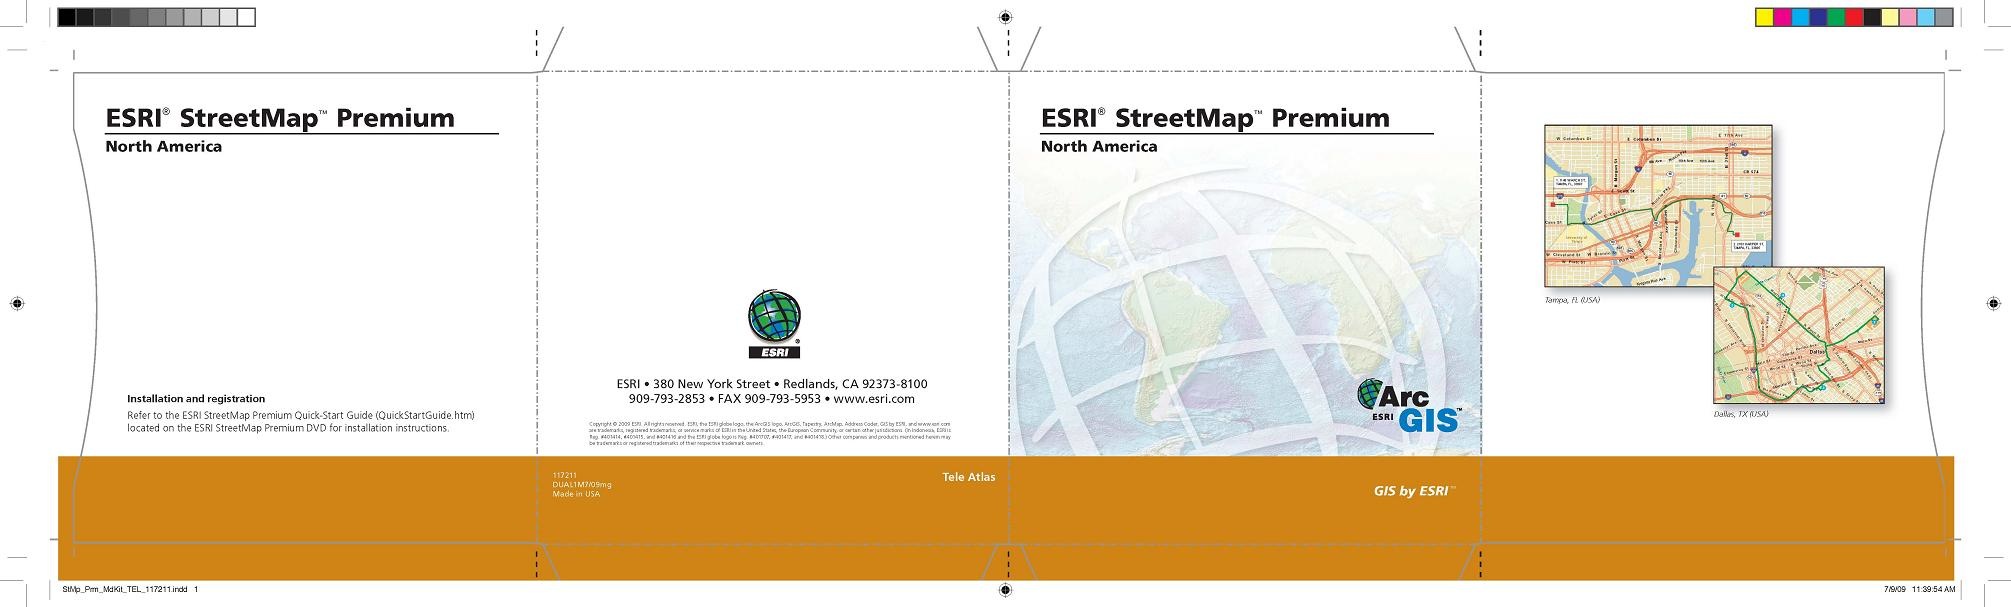 ESRI StreetMap Premium with Tele Atlas is AVAILABLE ! | ArcGIS Blog